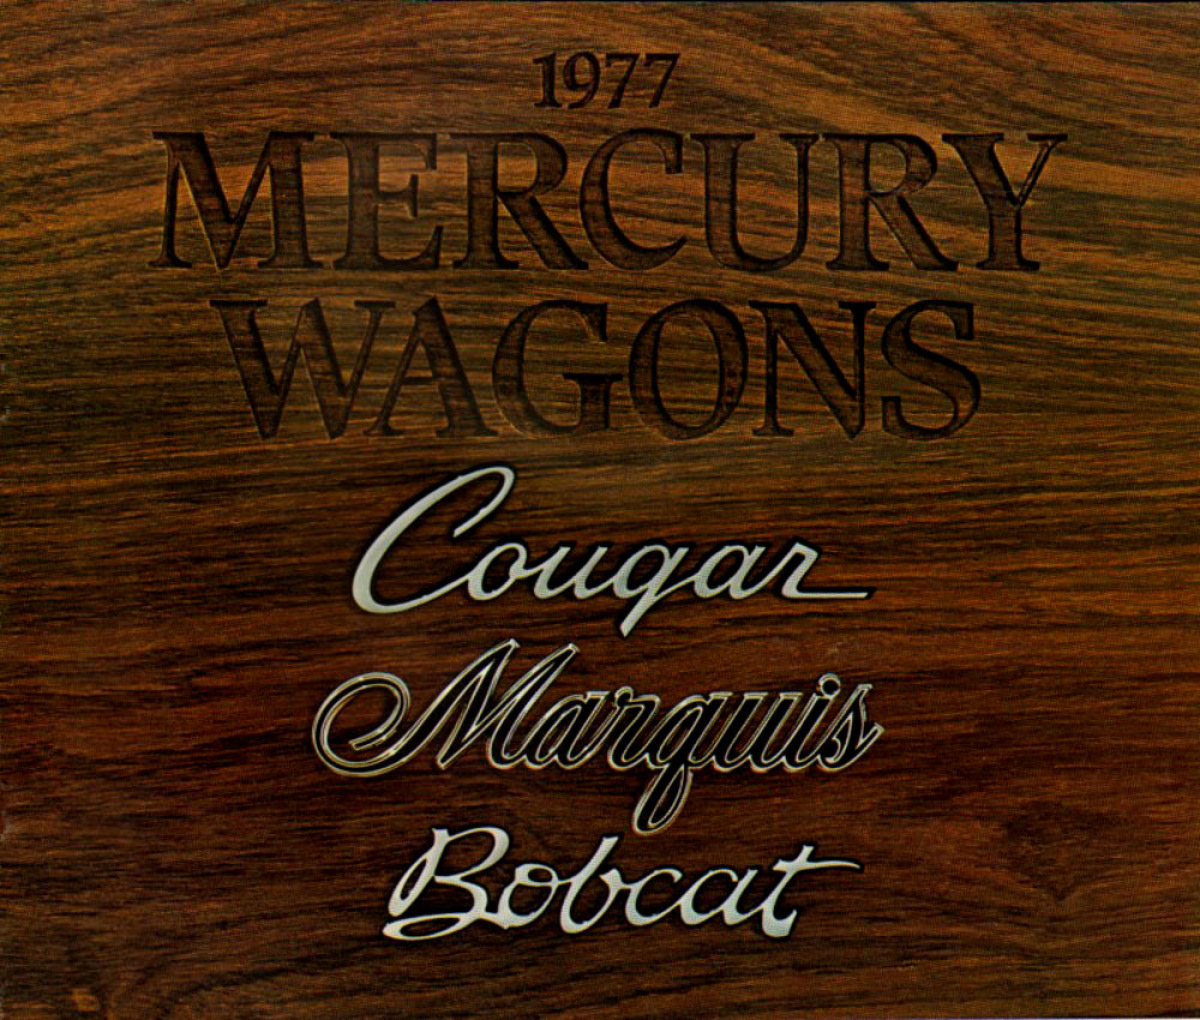 n_1977 Mercury Wagons-01.jpg